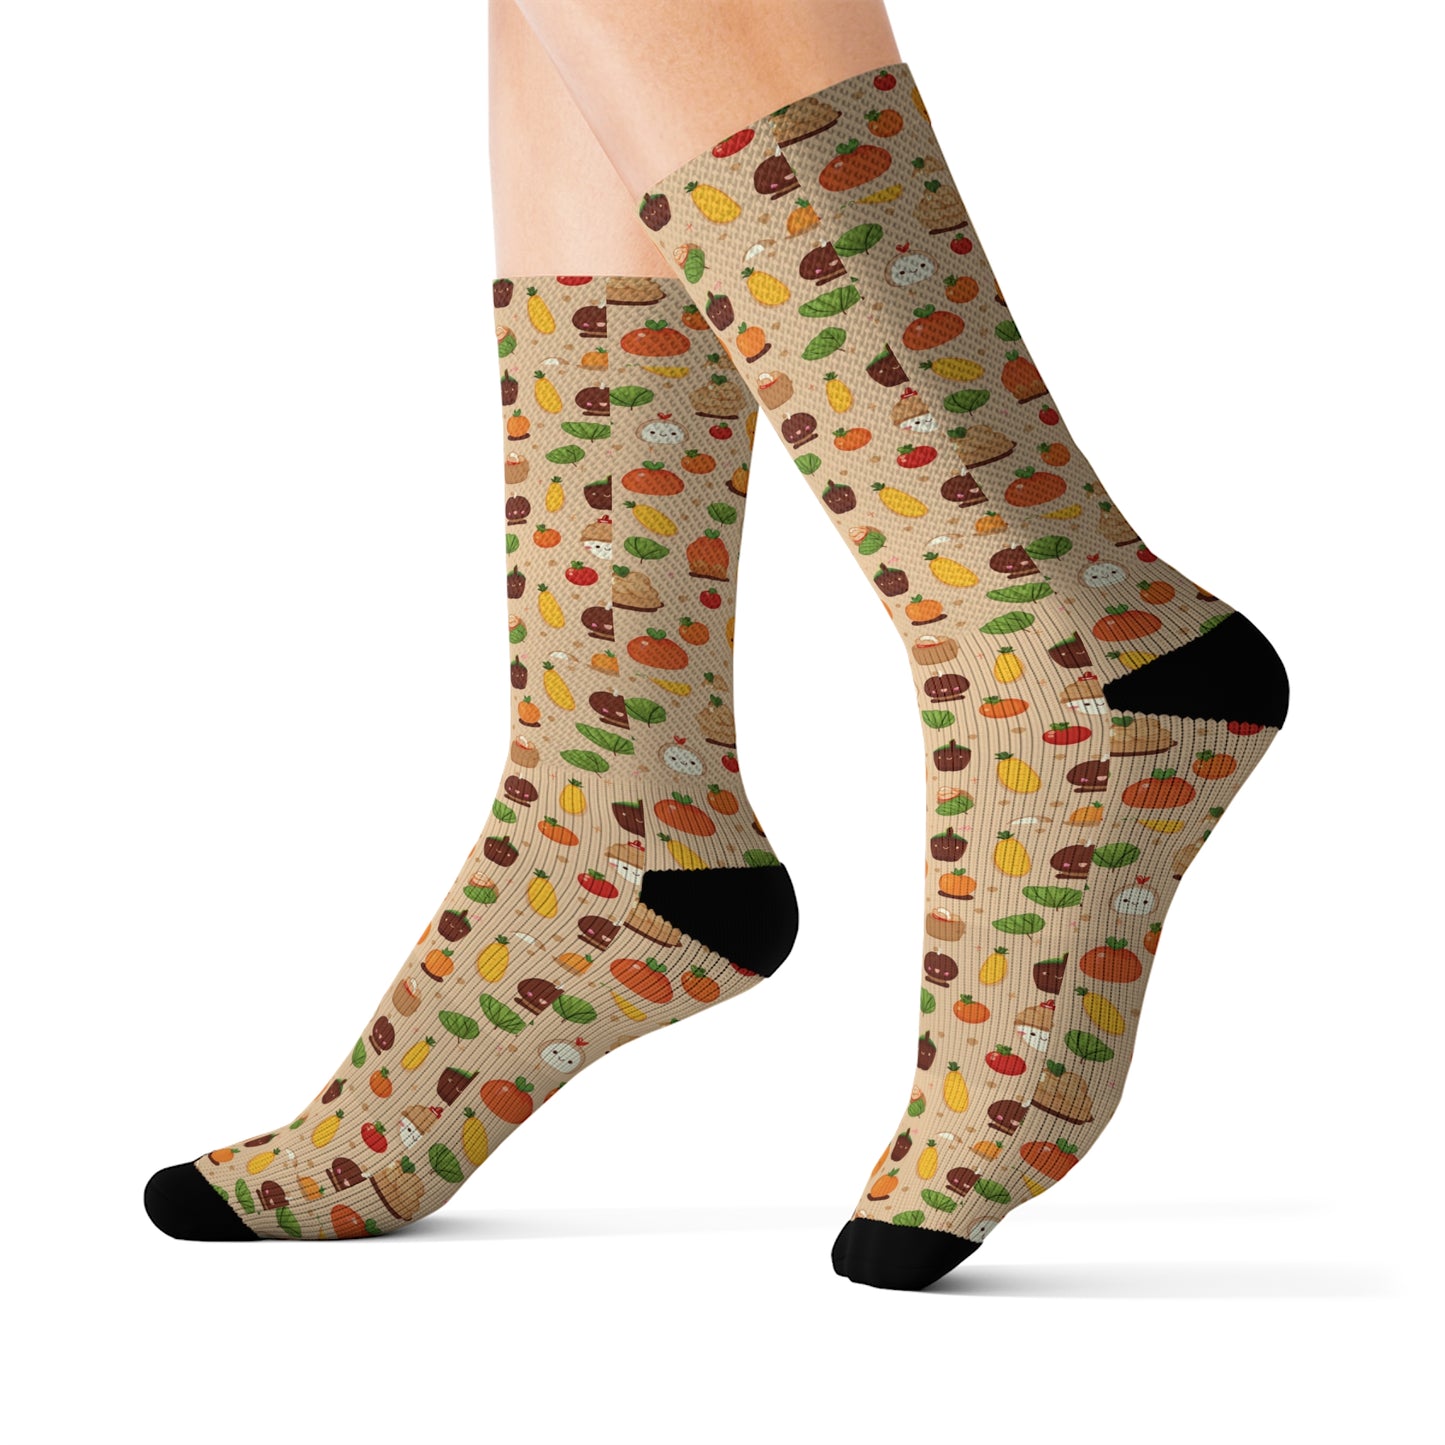 Kawaii Novelty Socks, Thanksgiving Socks Casual Funny Fun Socks for Men & Women,